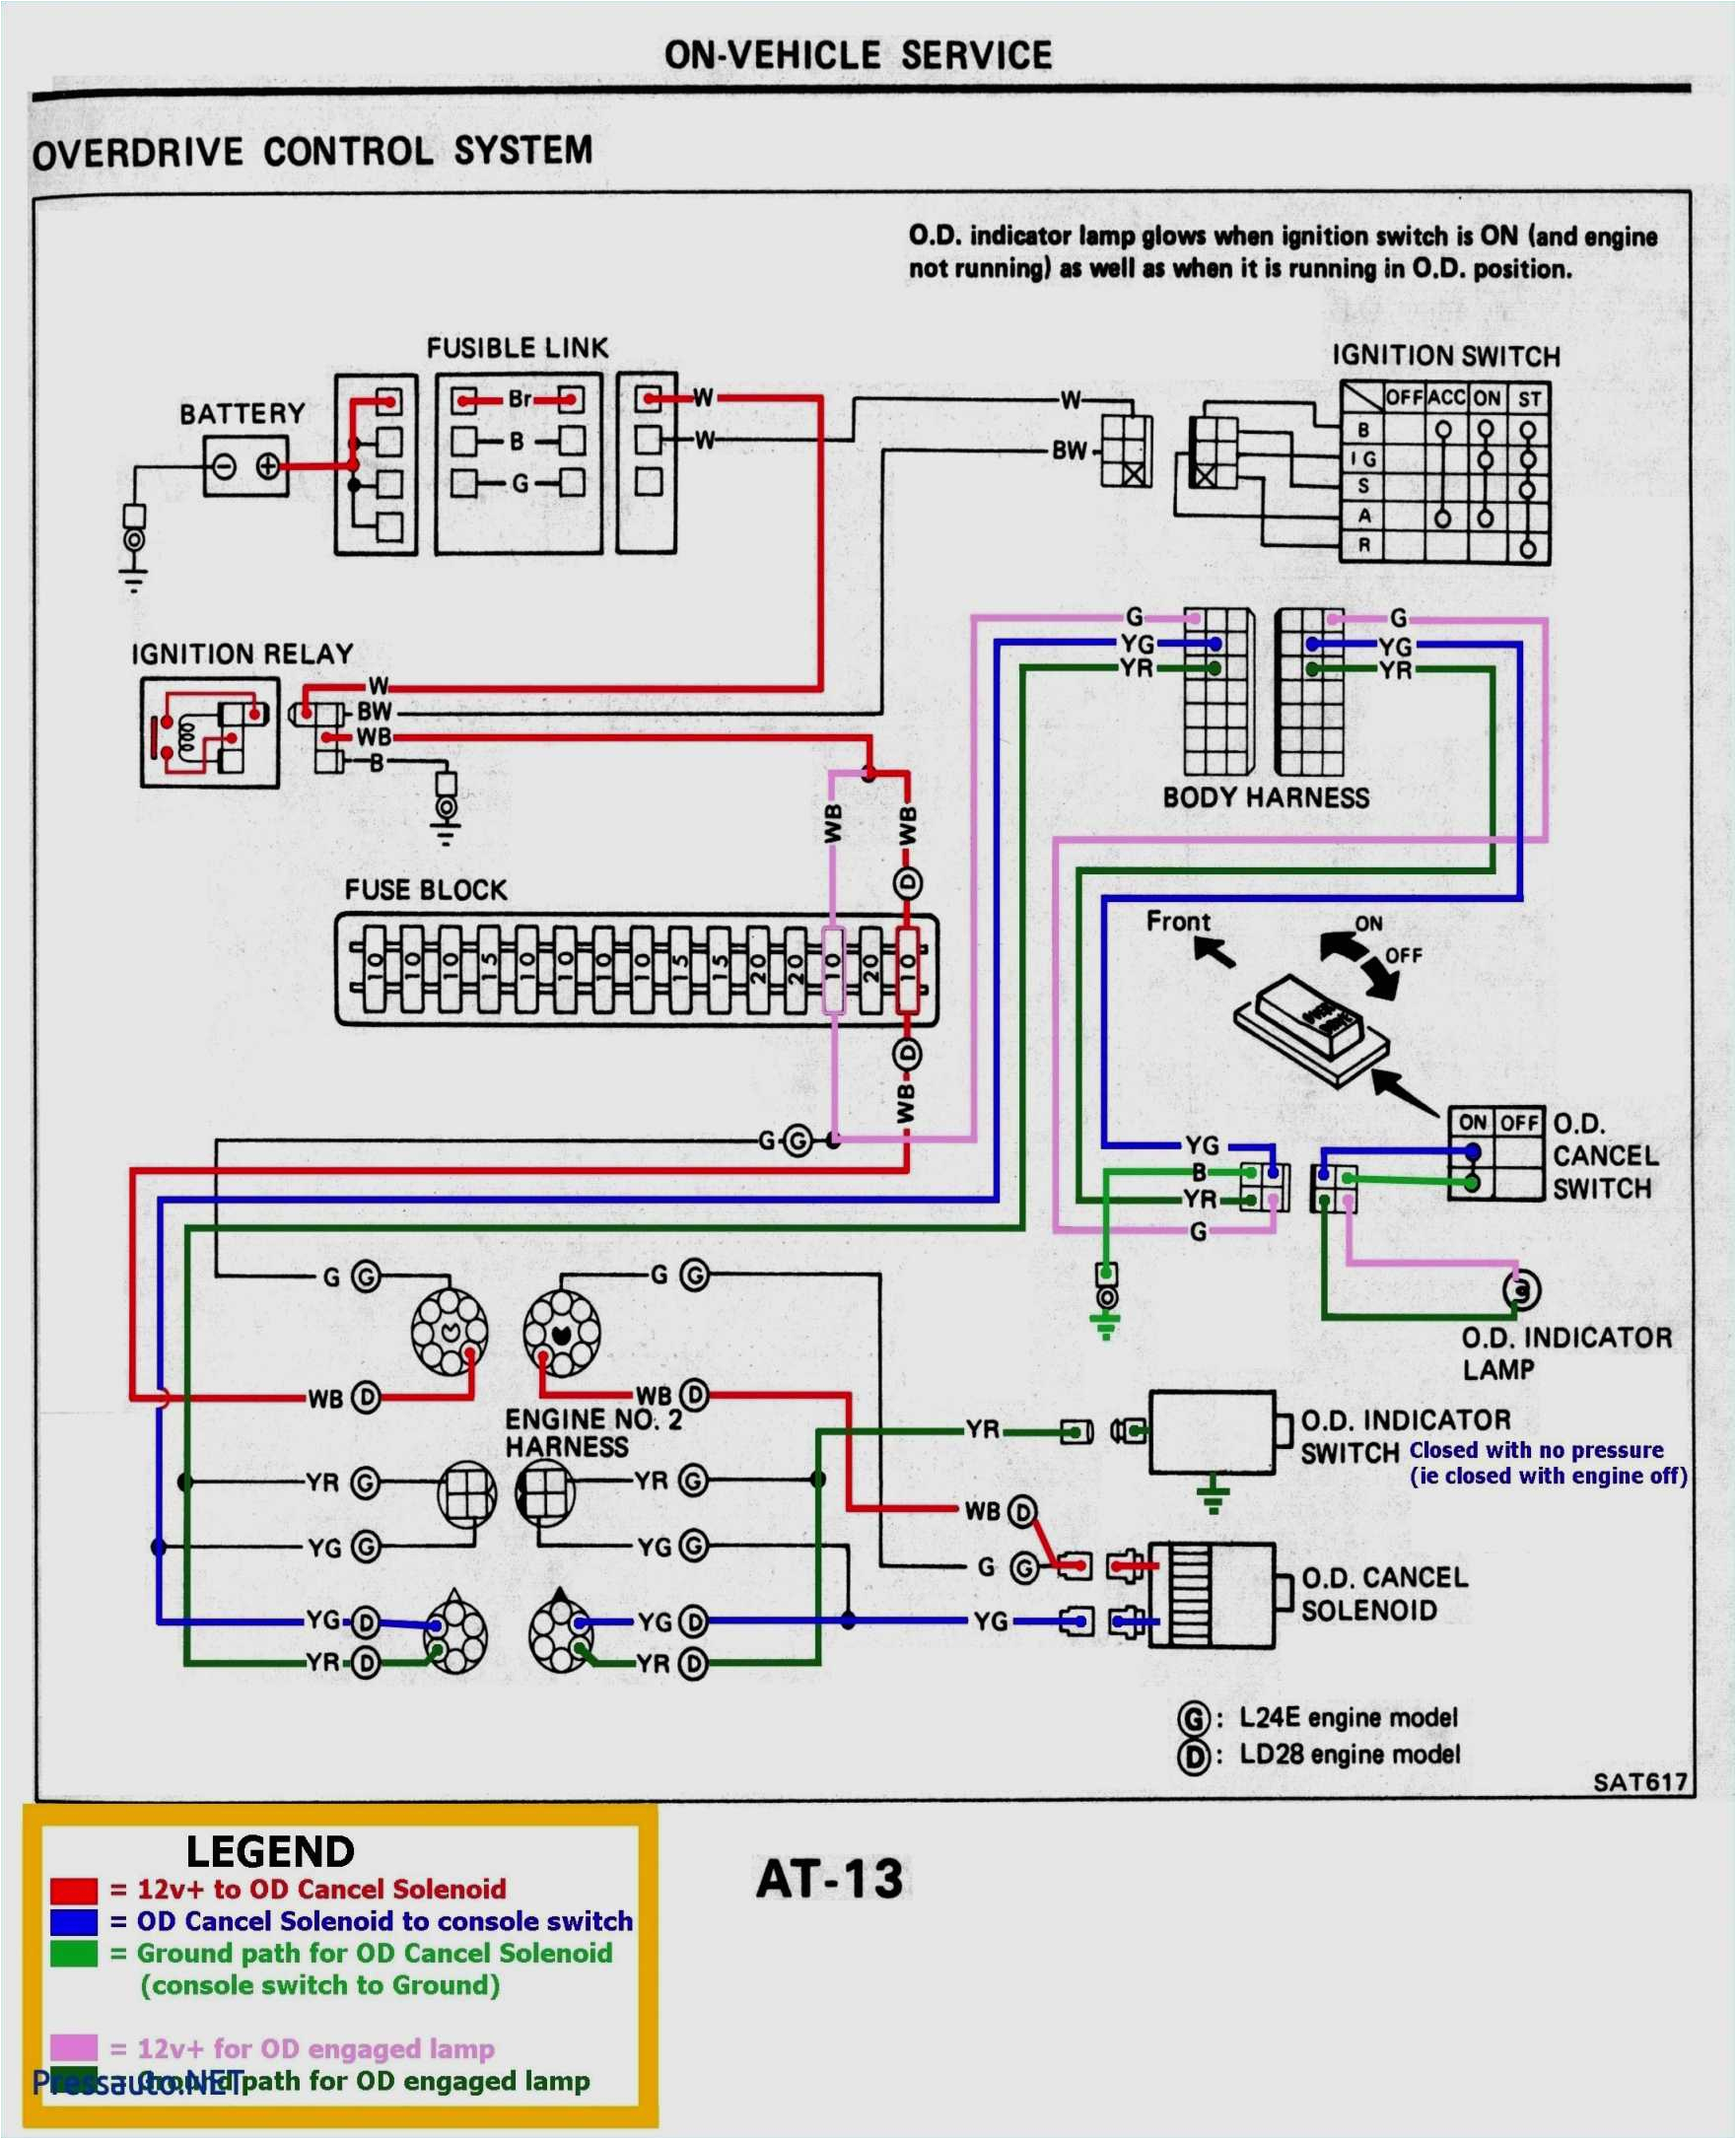 12v Switch Wiring Diagram 12v Switch Wiring Diagram Wiring Diagrams